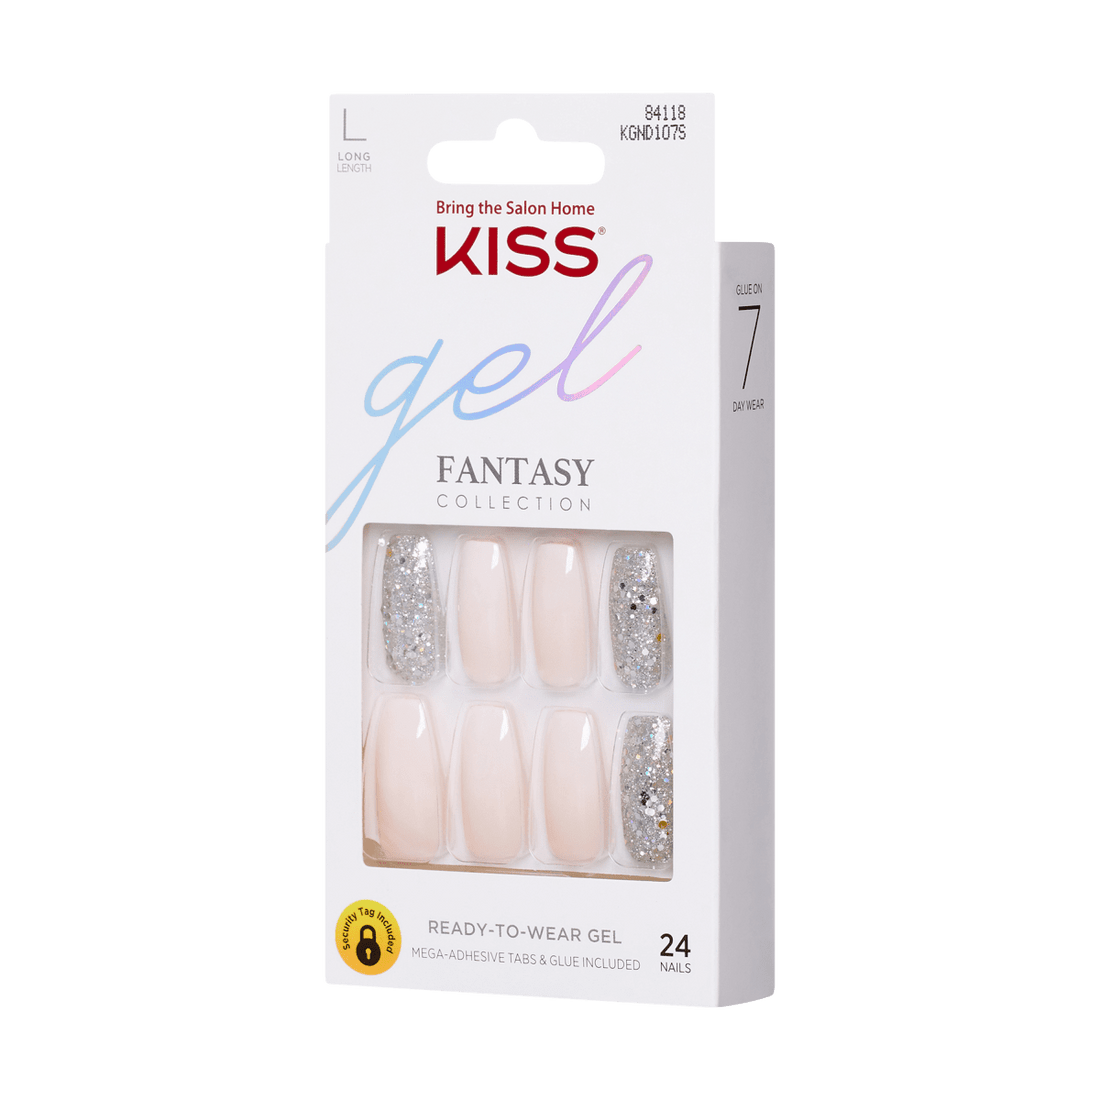 KISS Gel Fantasy Sculpted Nails - FRIENDS